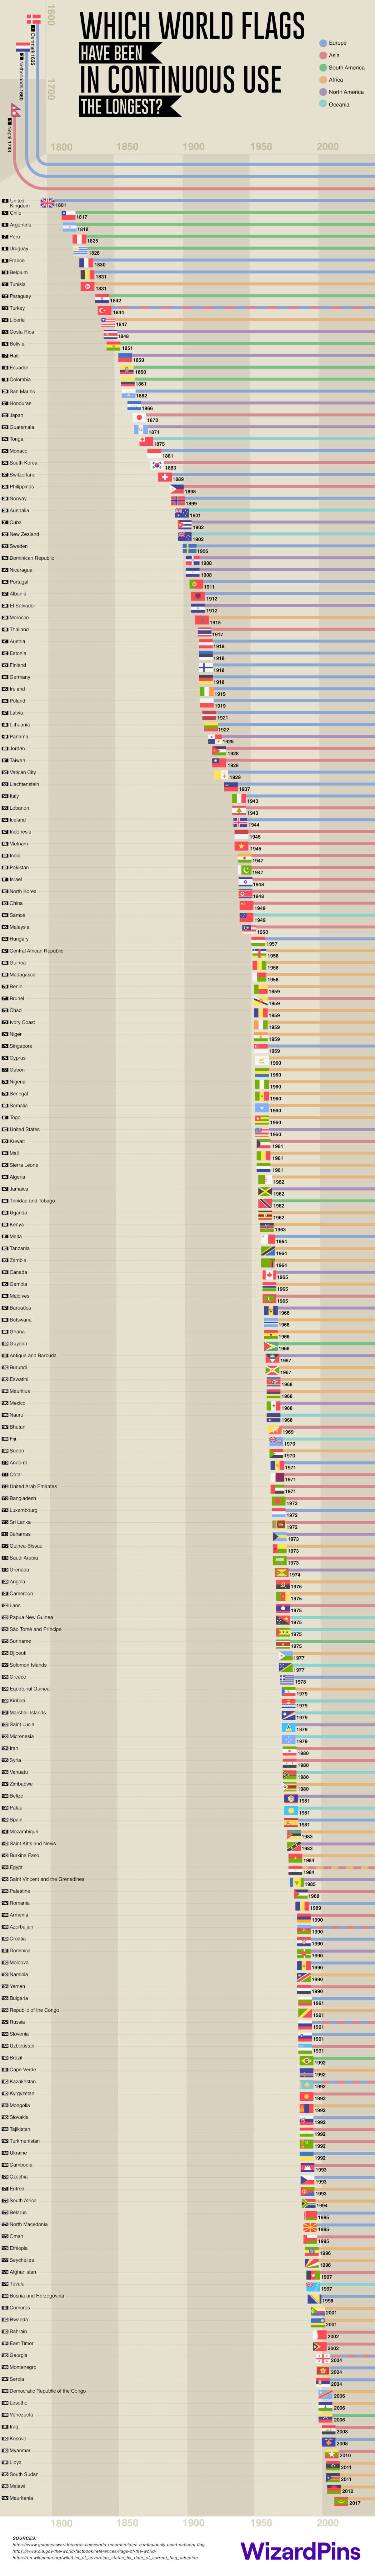 world-flags-timeline-the-chartsitry